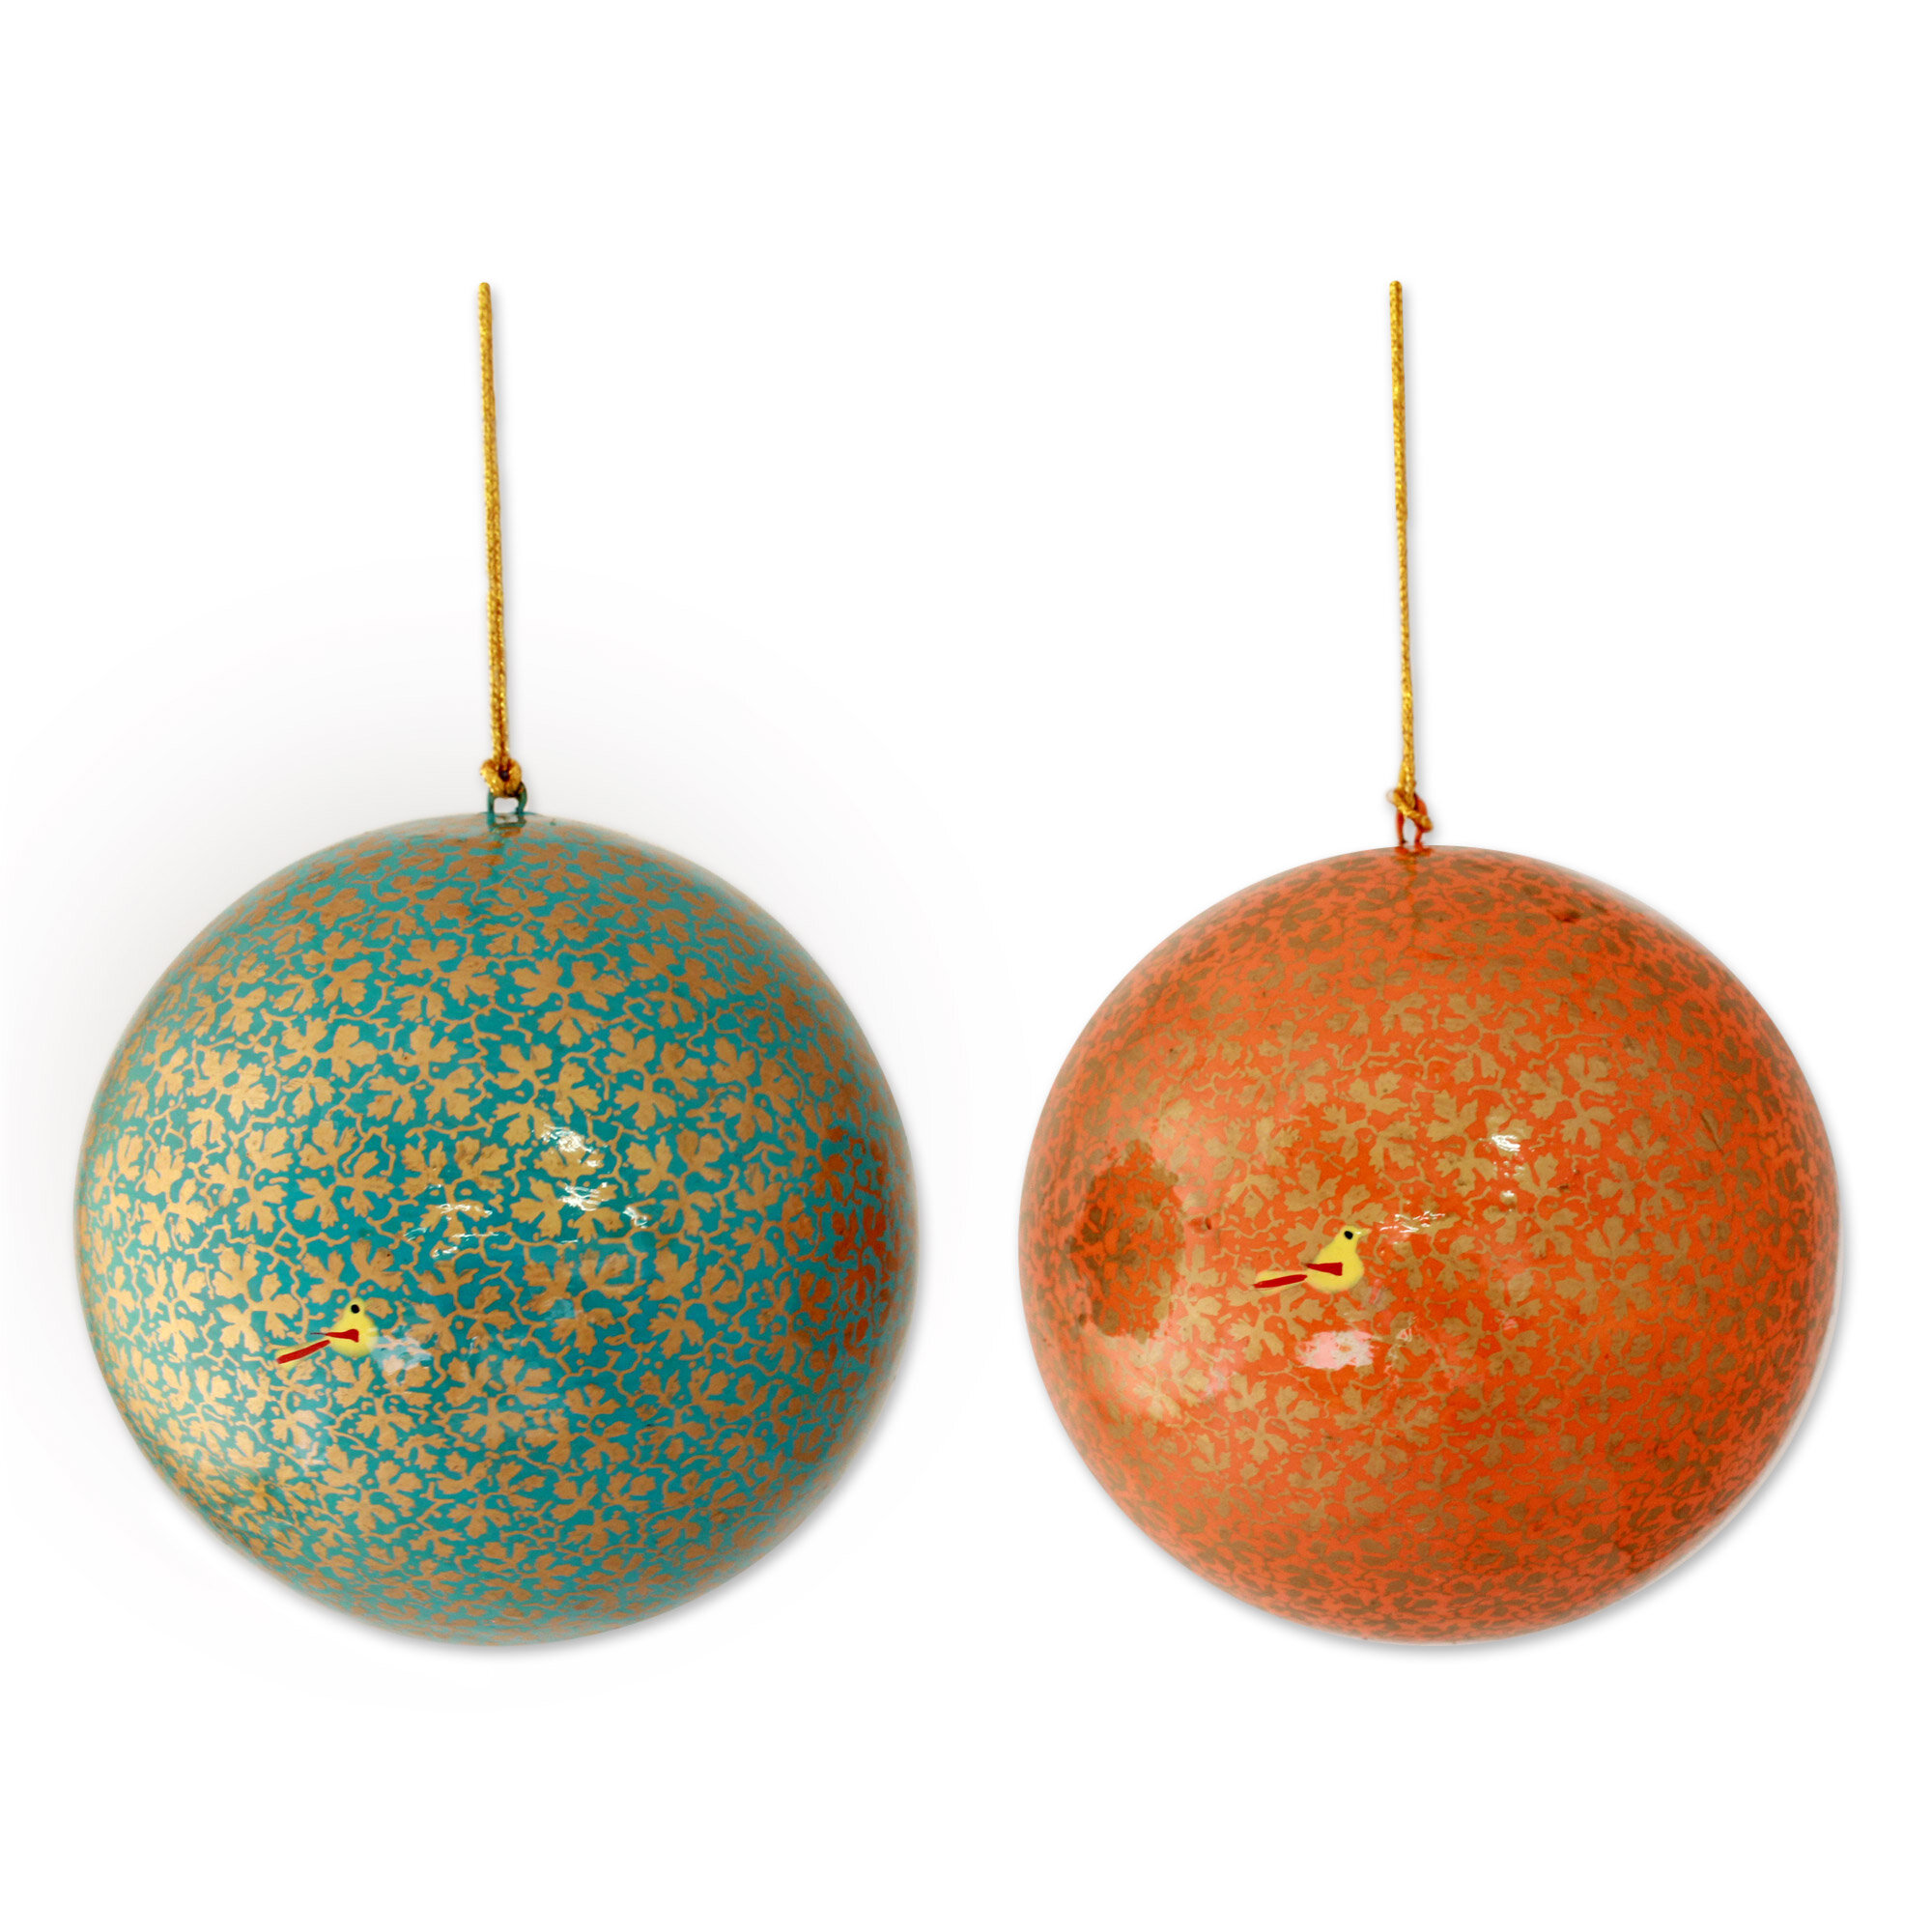 unique ornaments